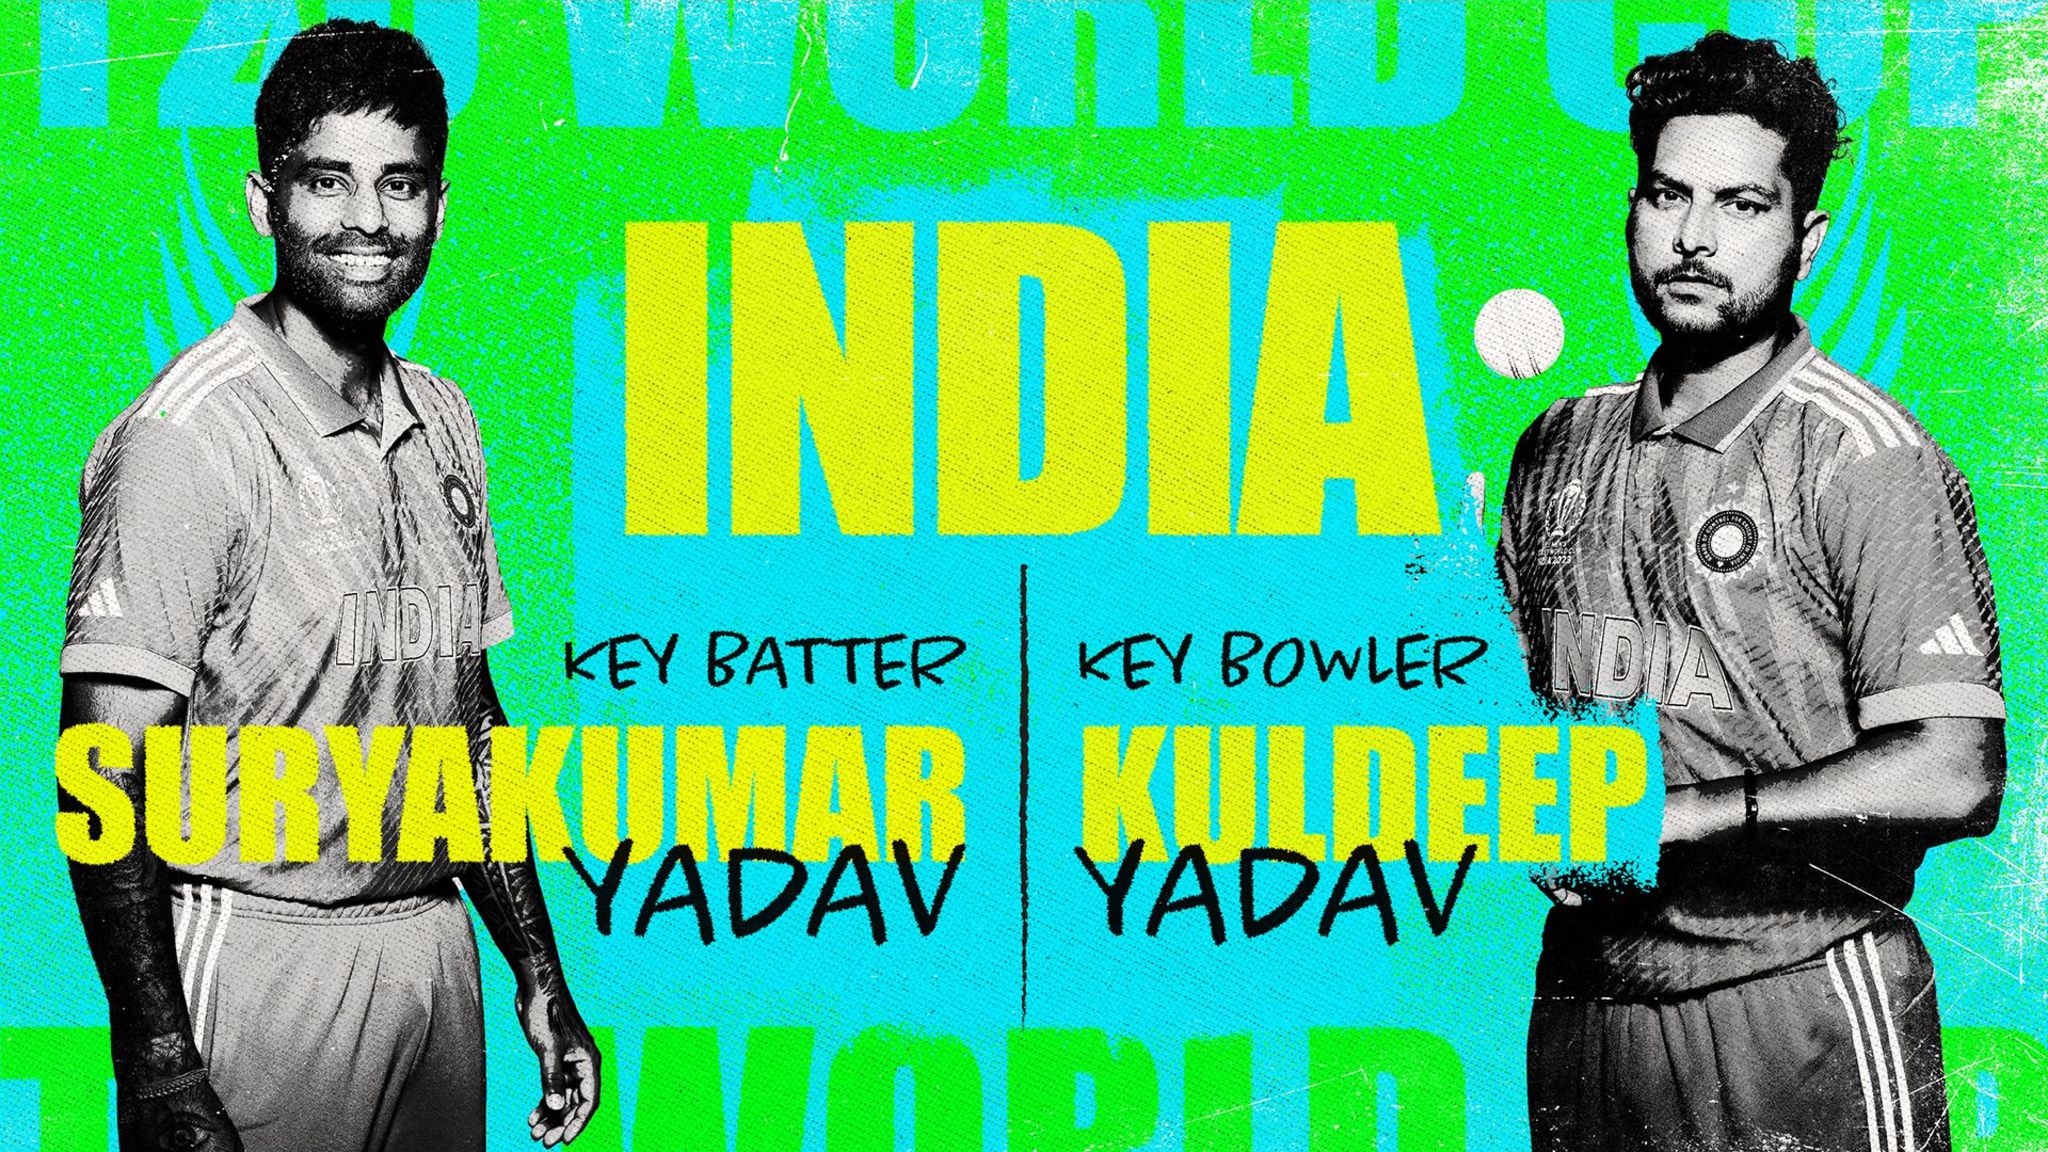 A graphic showing Suryakumar Yadav and Kuldeep Yadav as India's key batter and bowler at the T20 World Cup